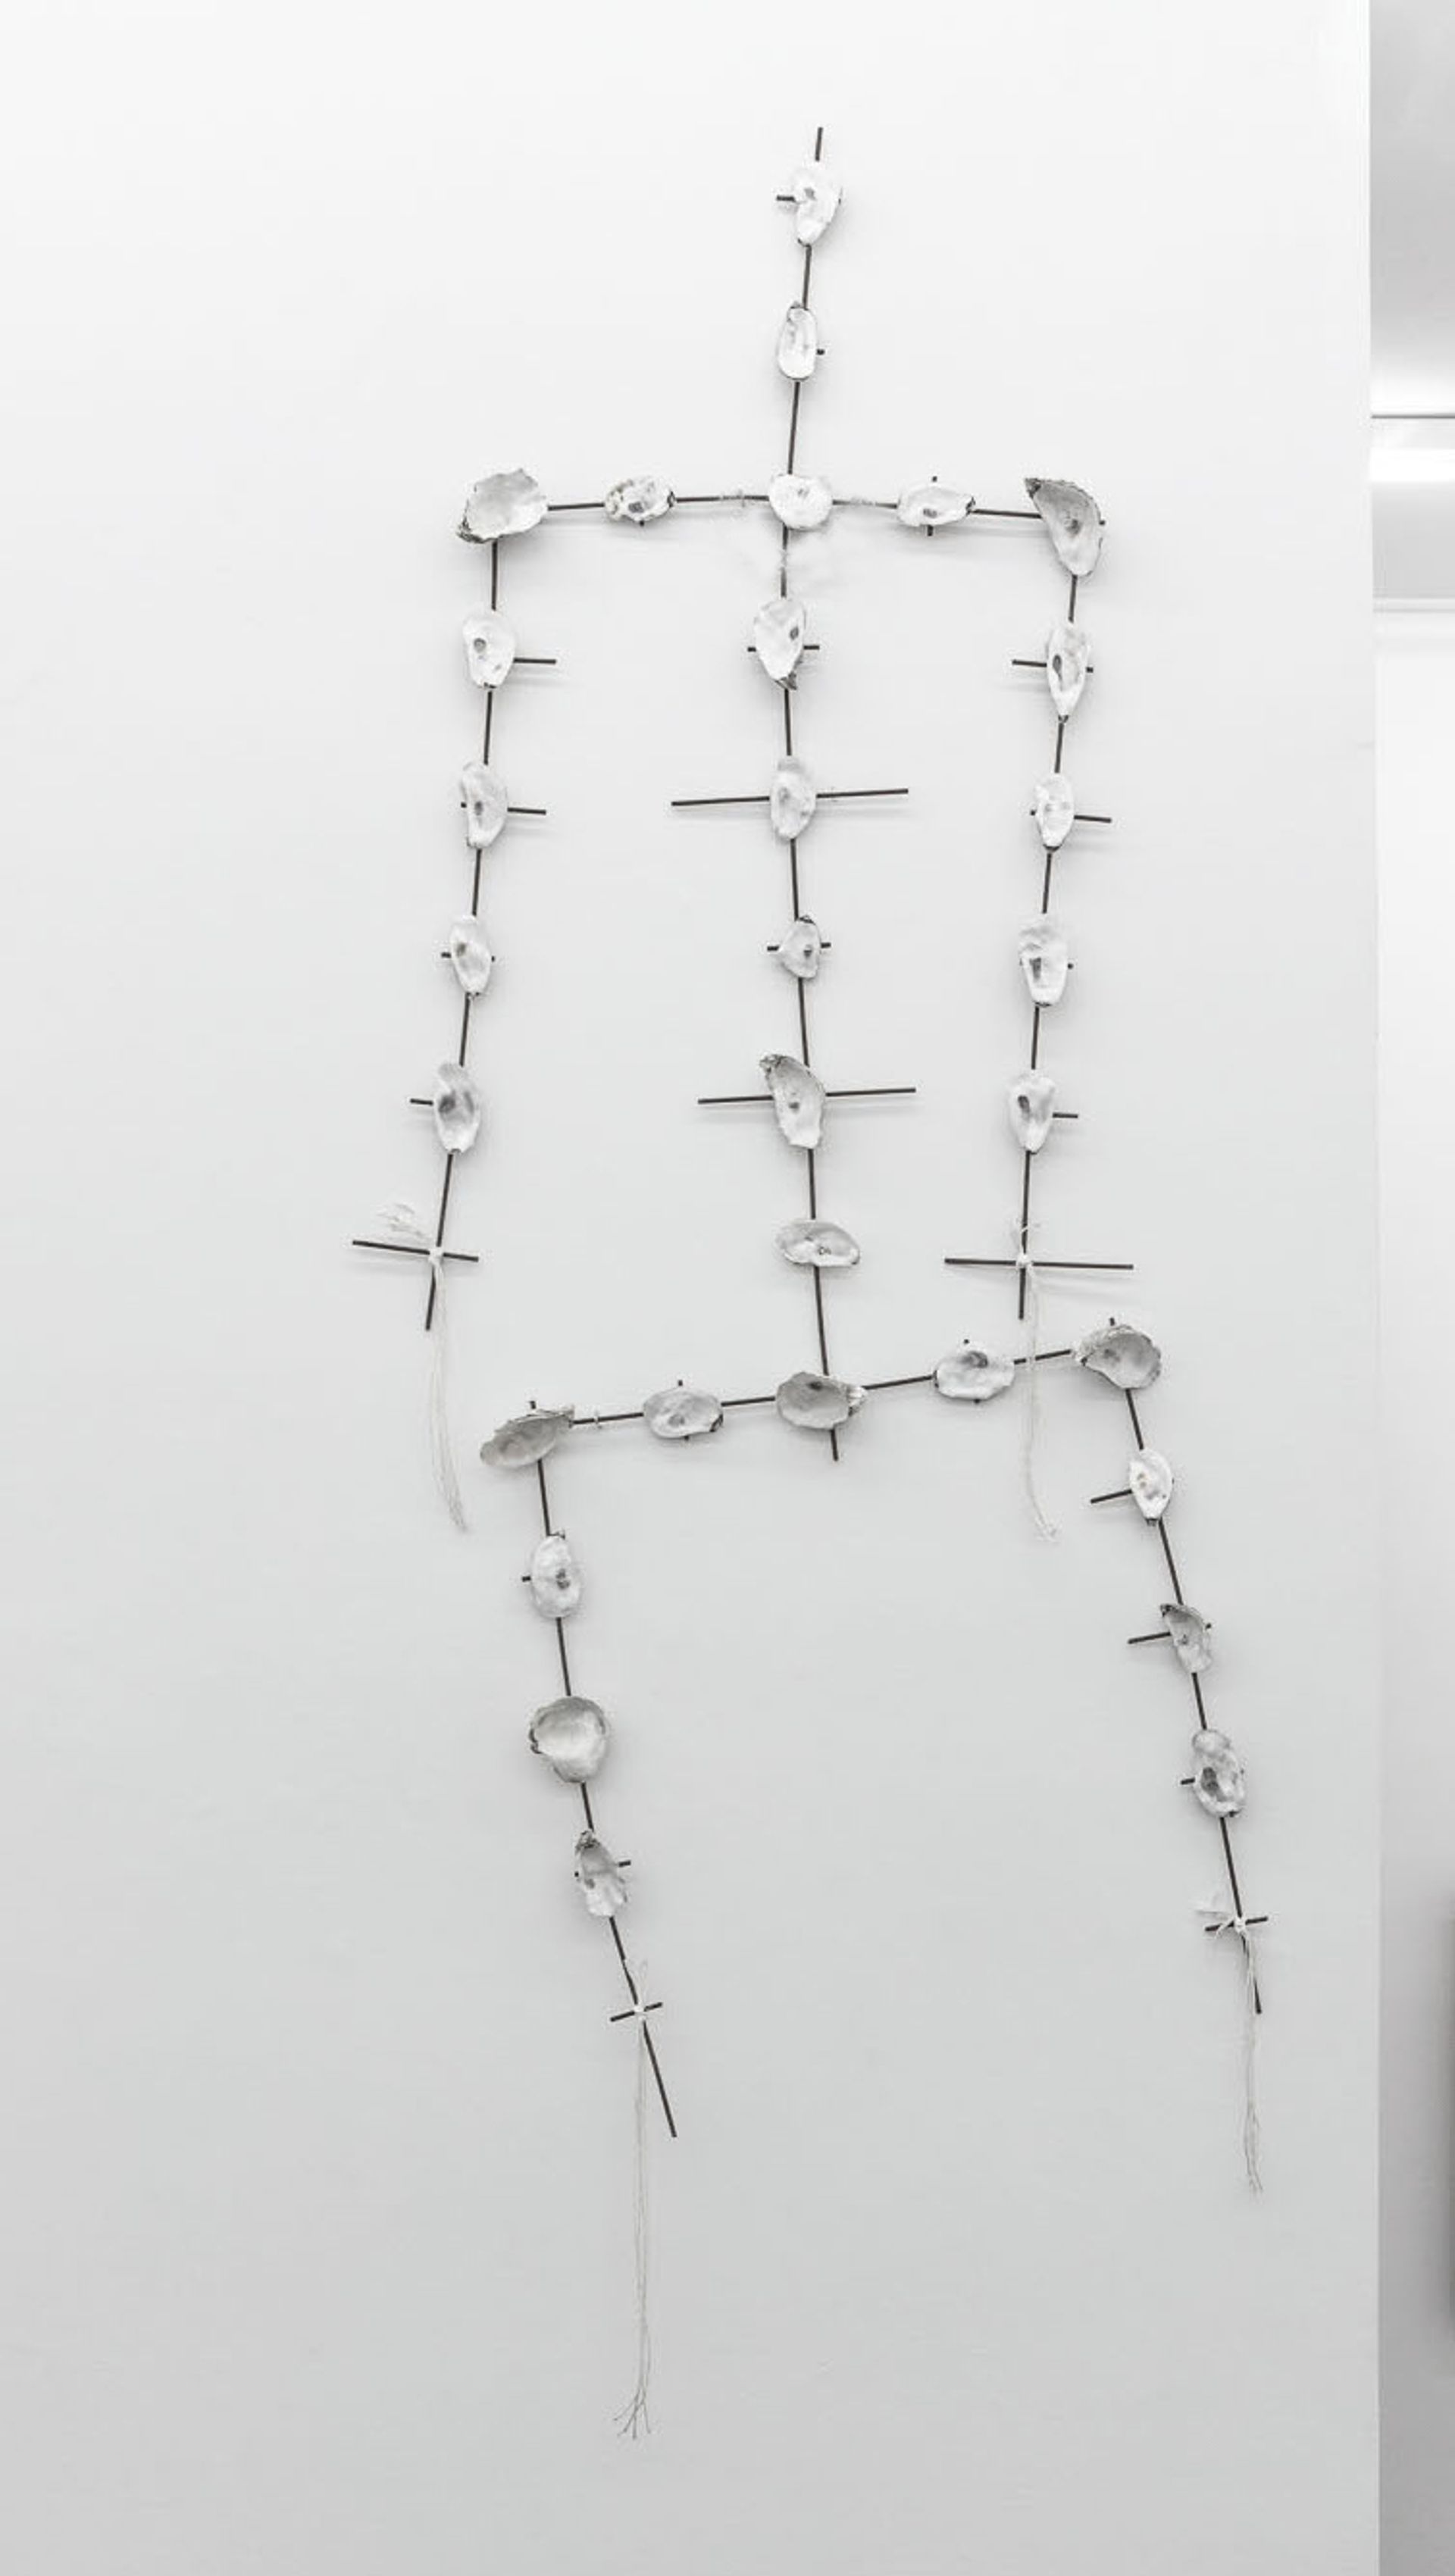 Anna McCarthy, Endo/Exoskeleton, 2020, oyster shells on metal
200 × 85 cm